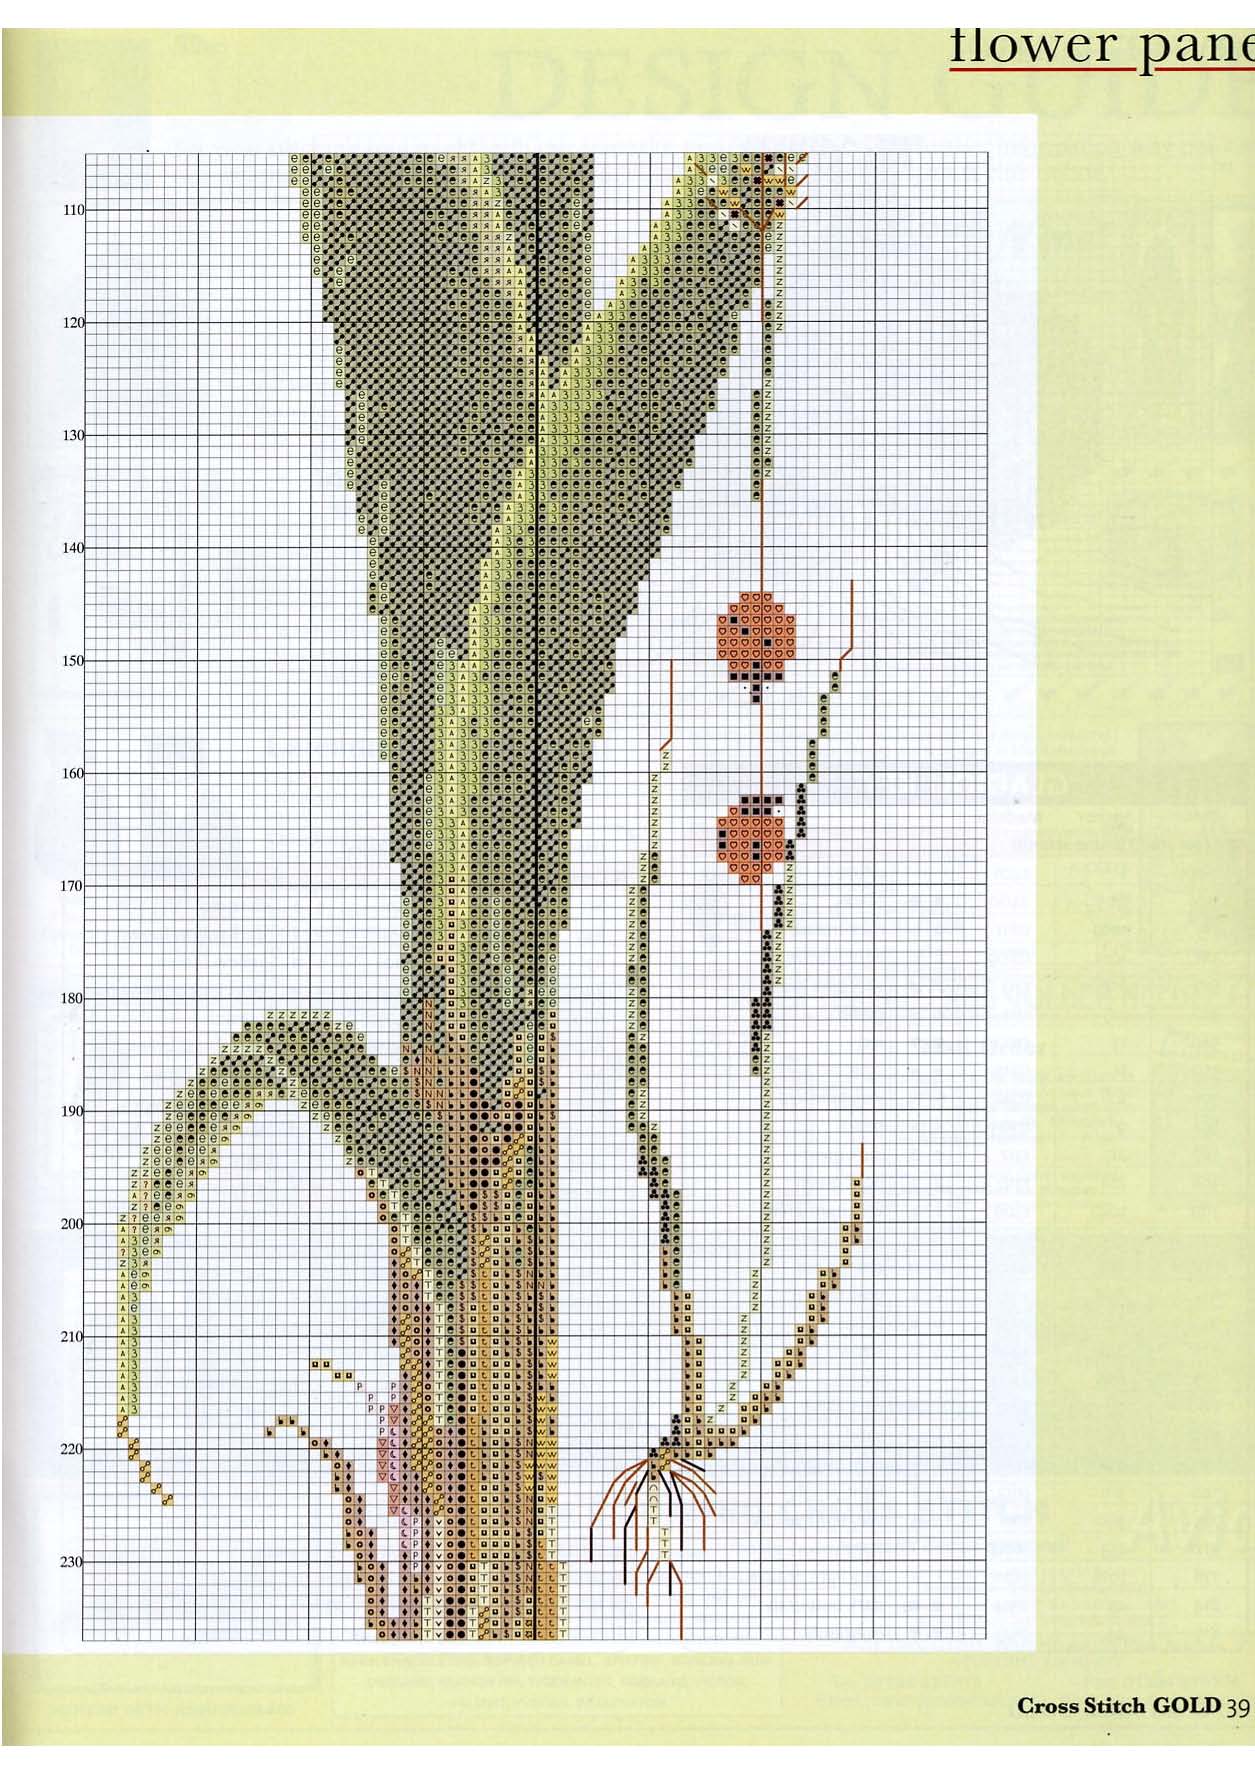 Gladioli flowers cross stitch pattern (4)